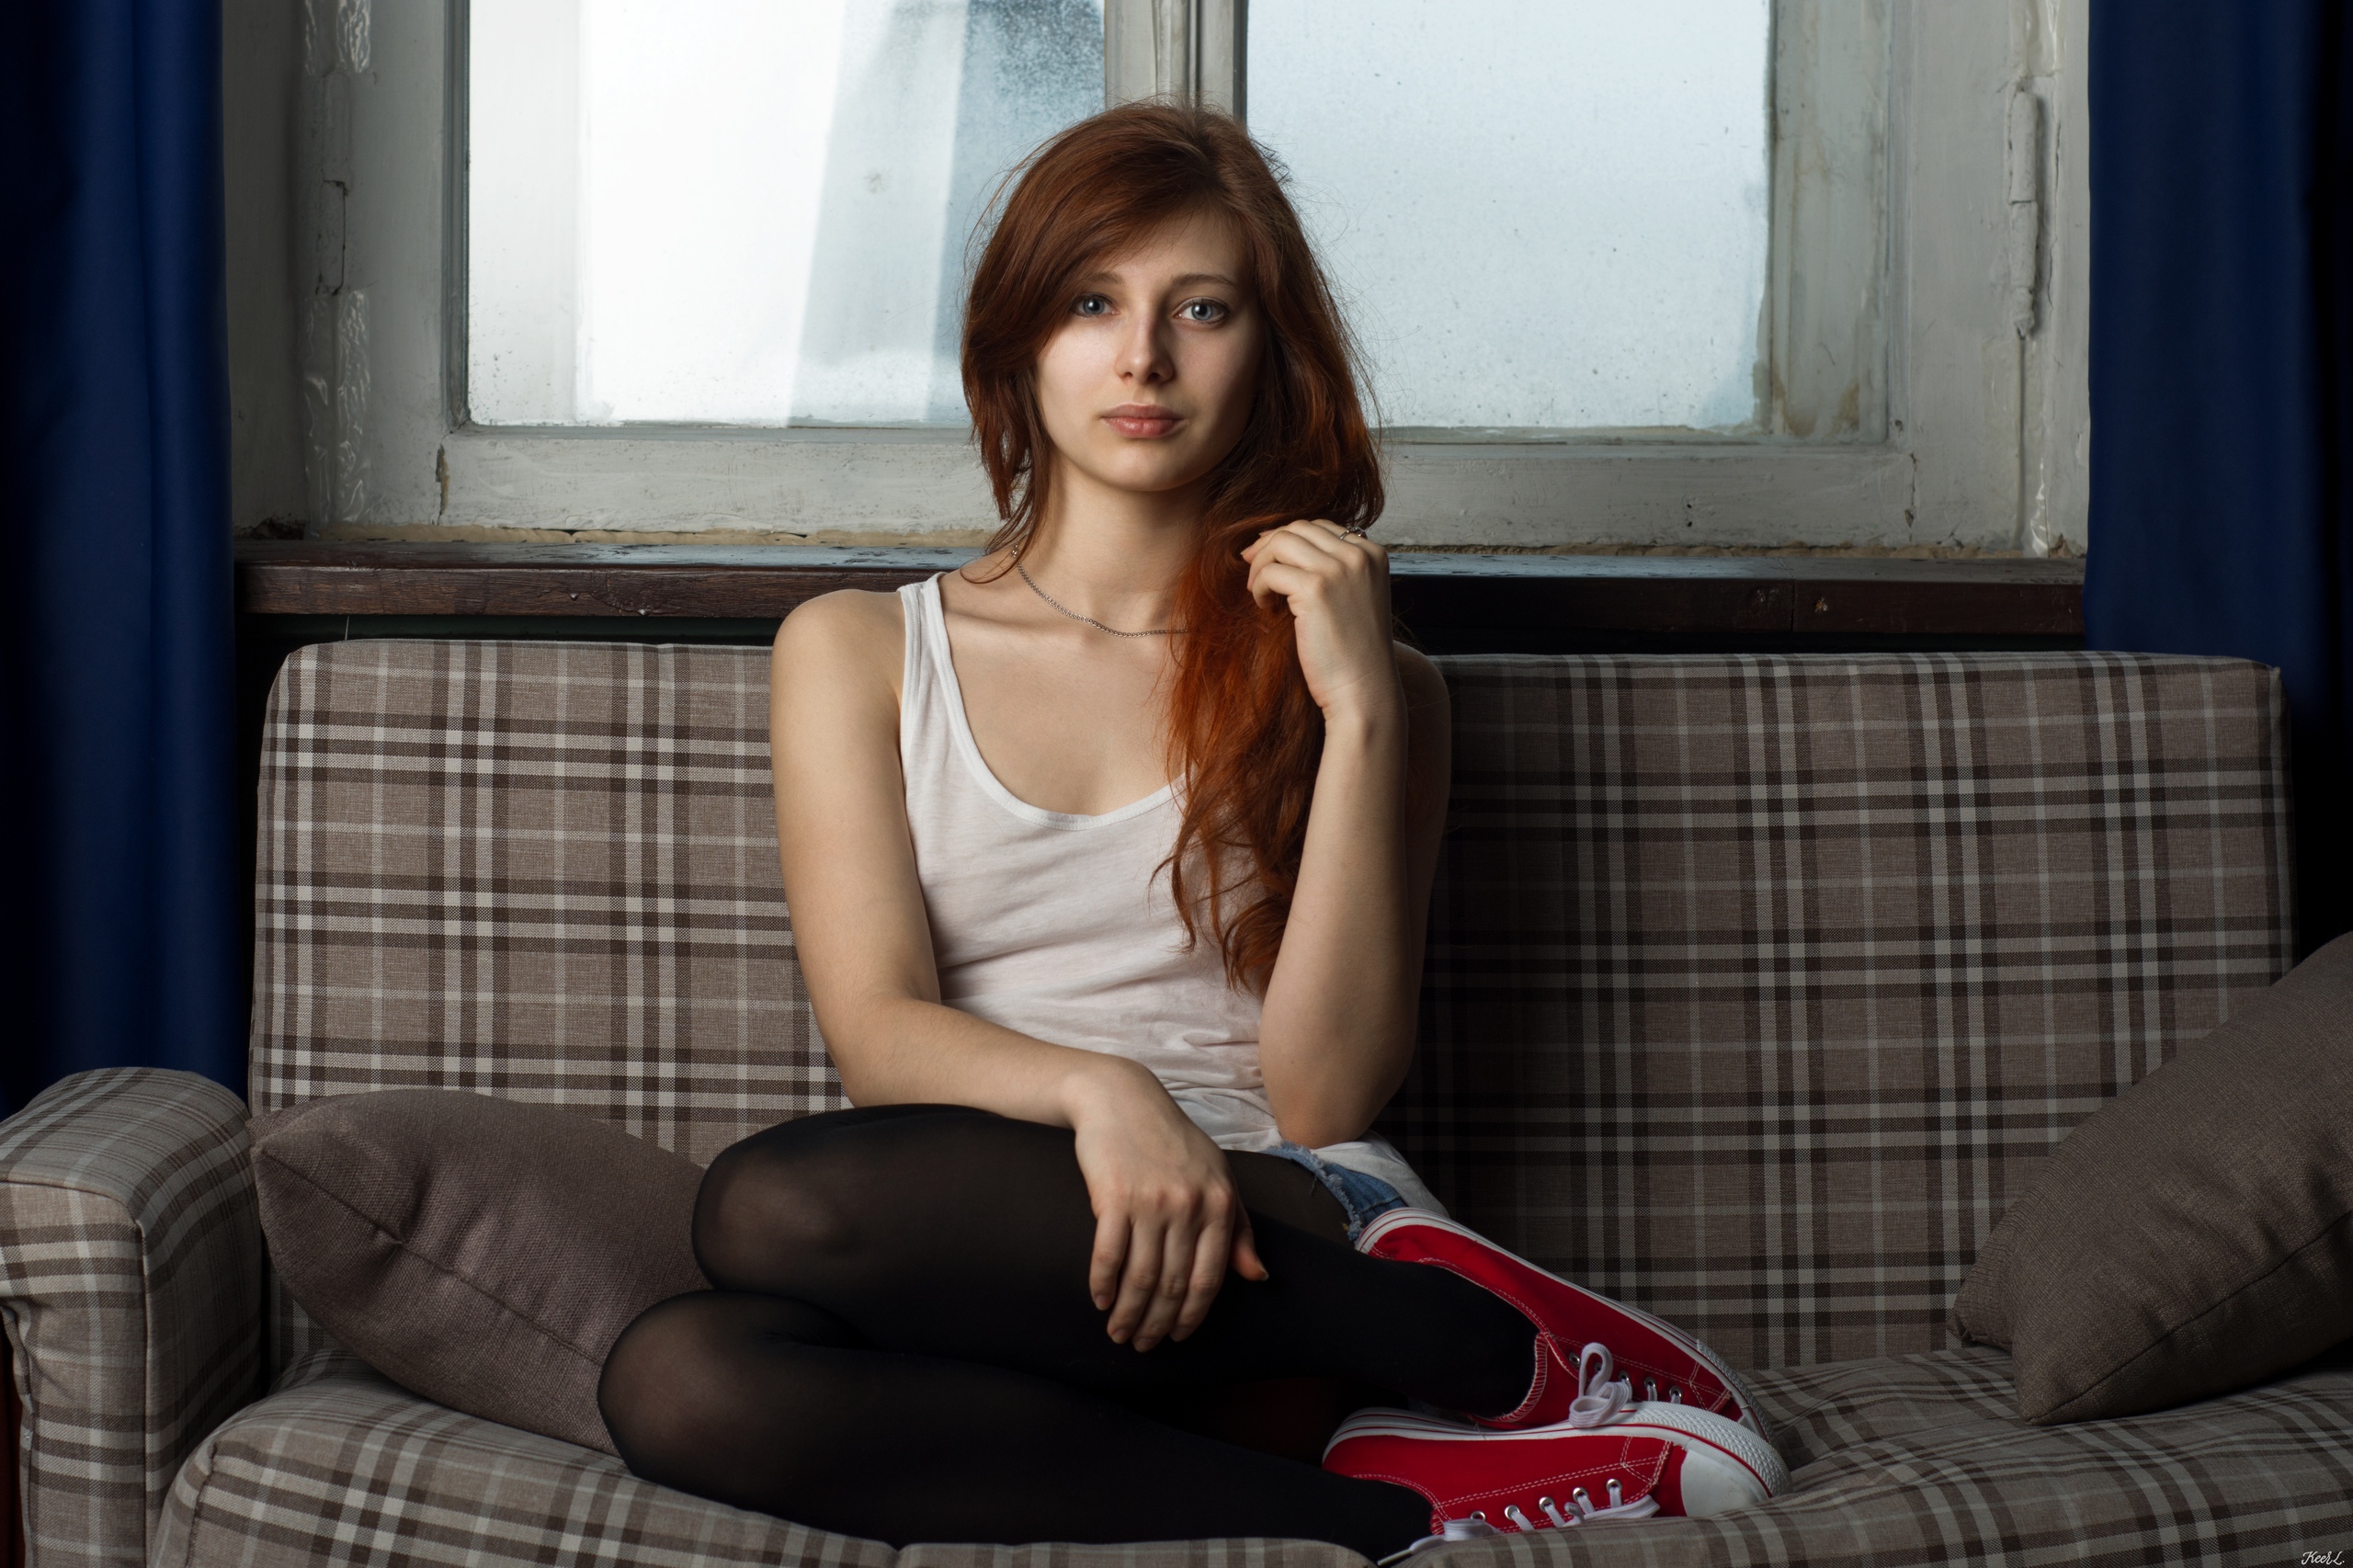 Redhead Long Hair Women Model Touching Hair Portrait Frontal View White Tops Tank Top Converse Sitti 2560x1706